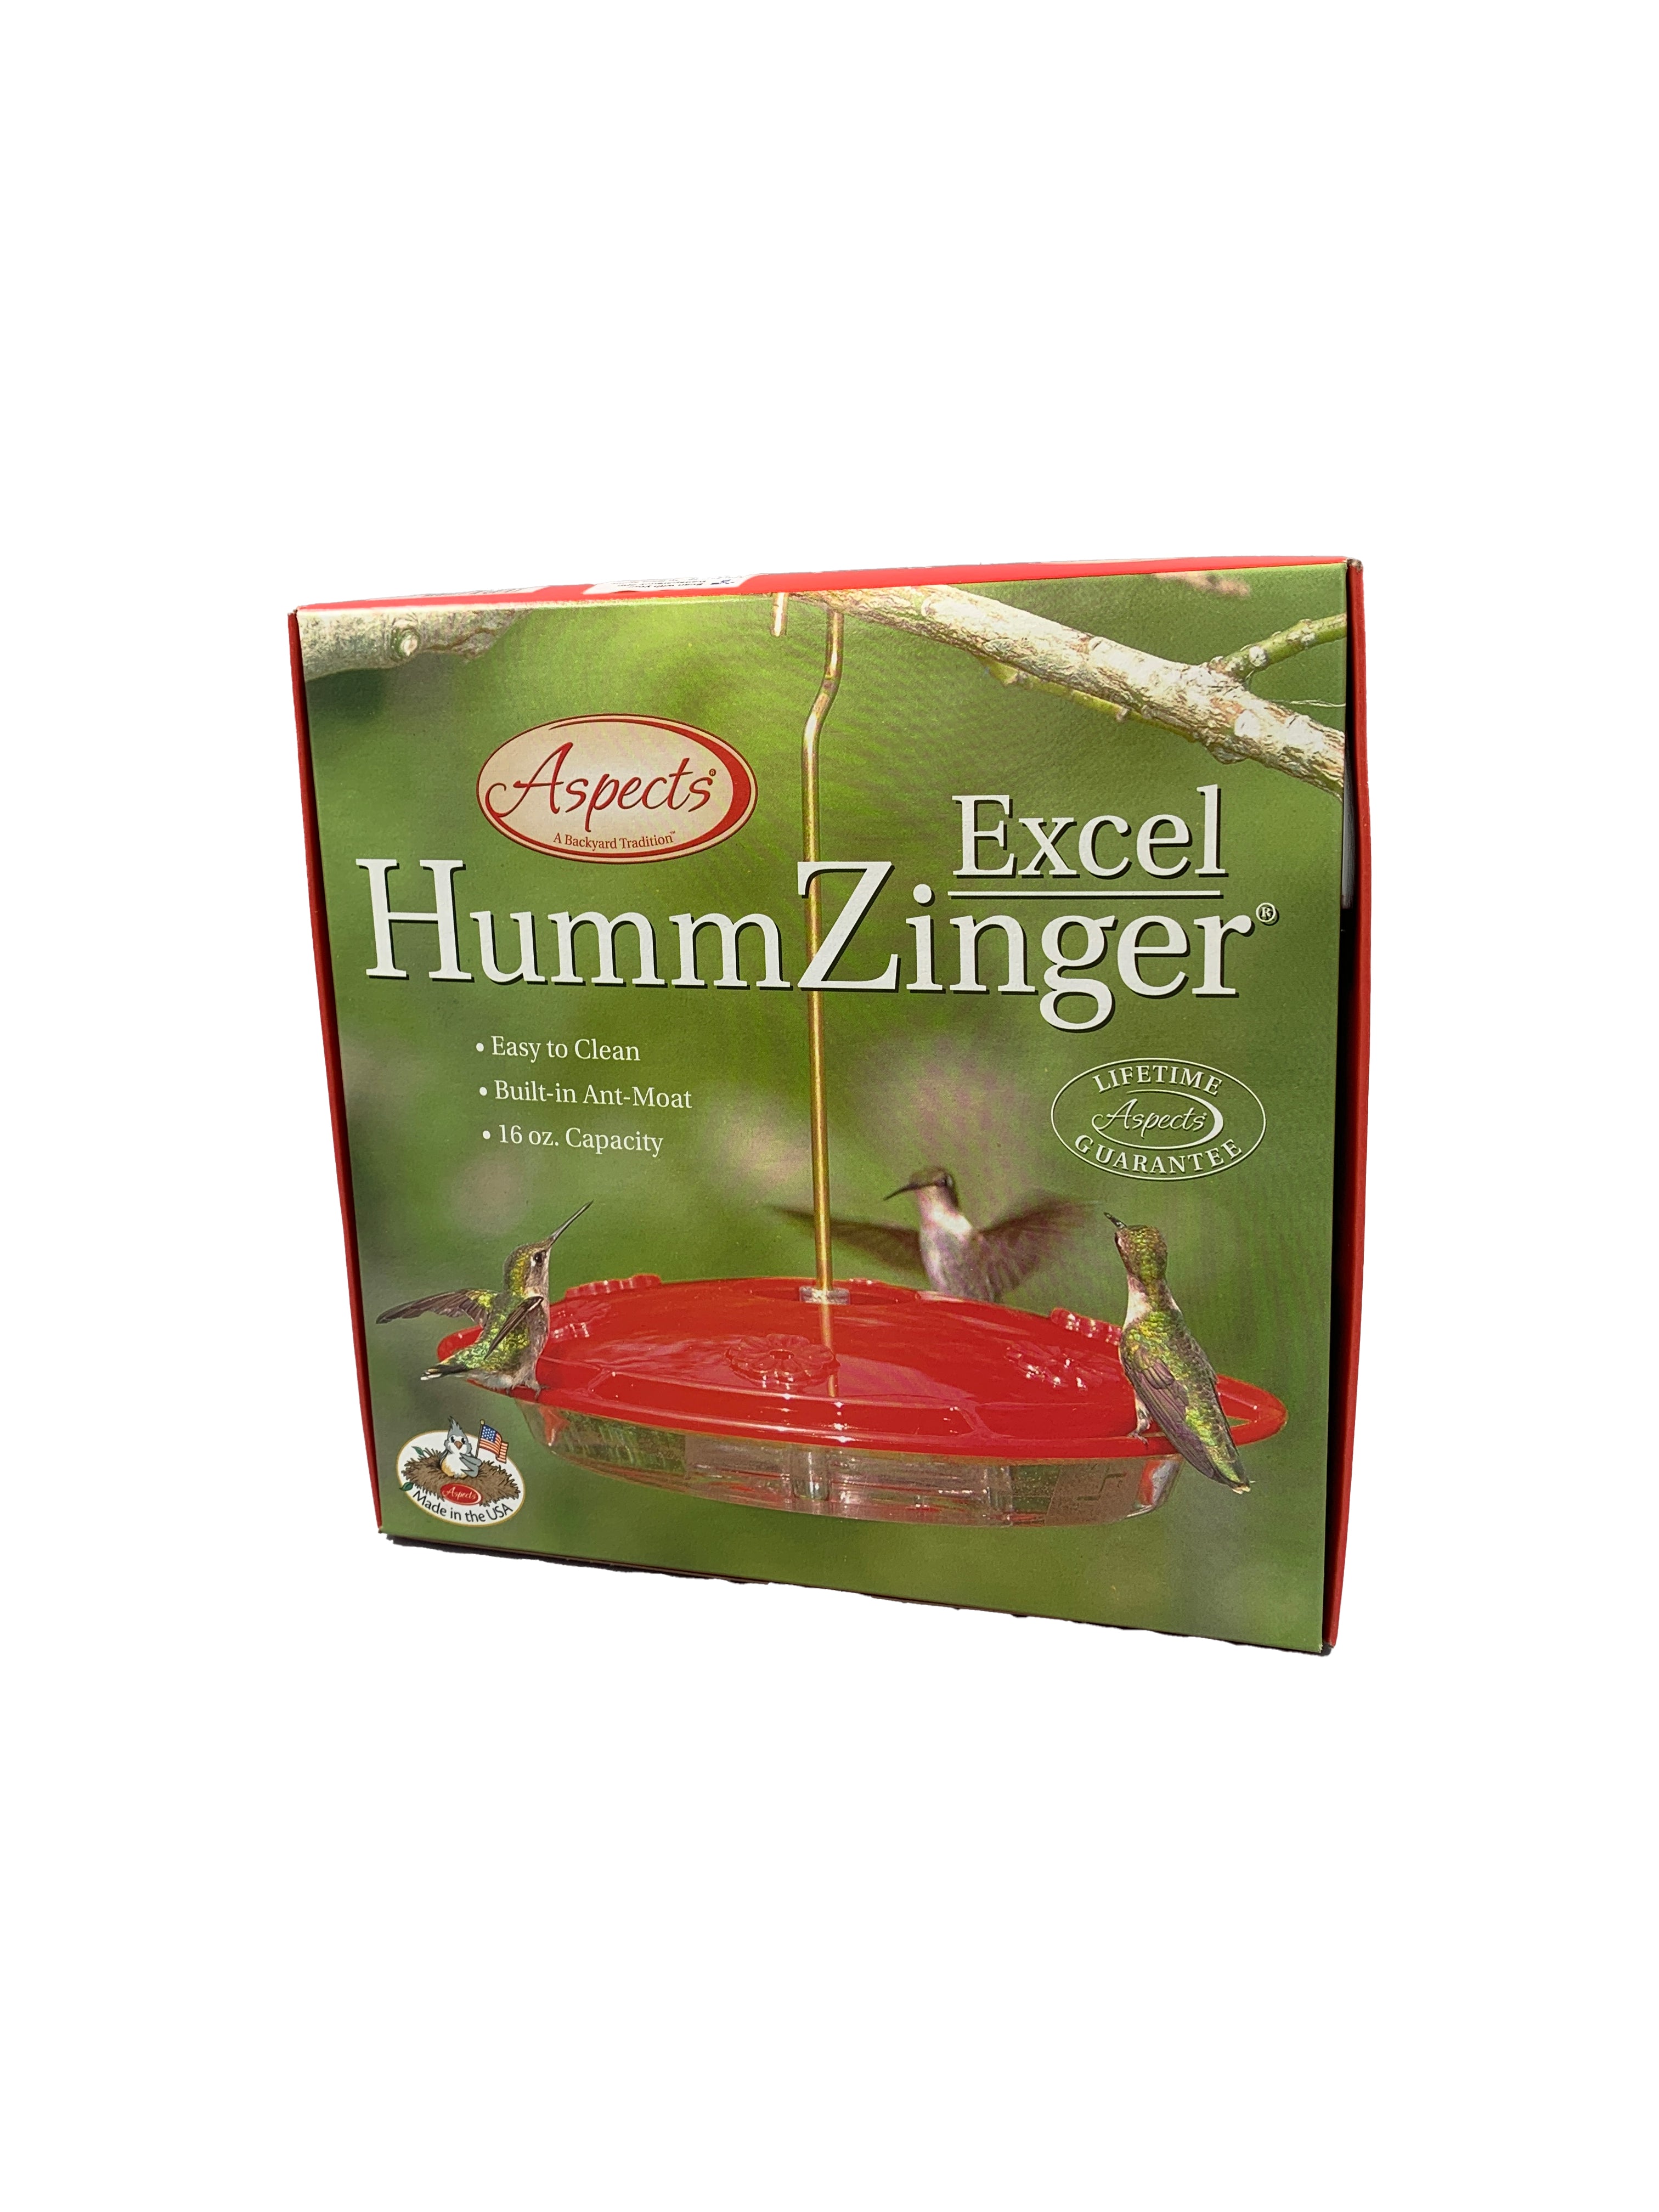 Hummzinger Excel Hummingbird Feeder